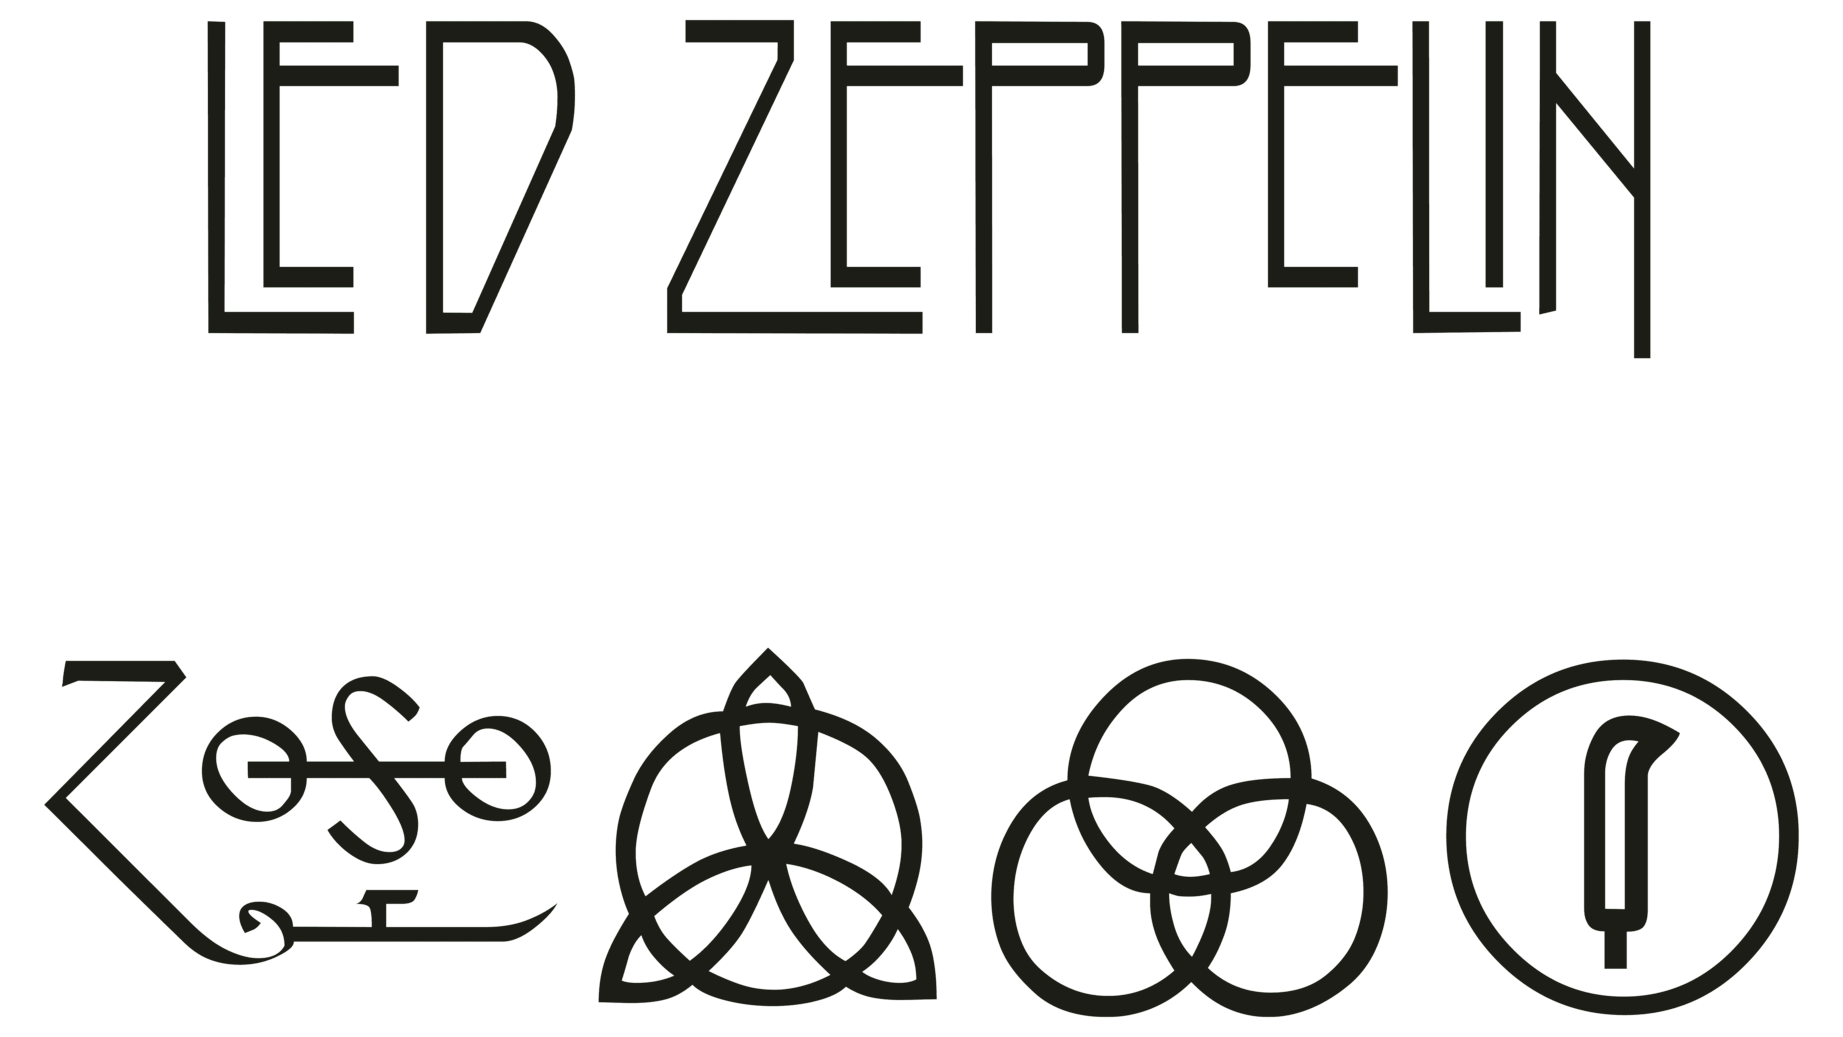 Led zeppelin symbol